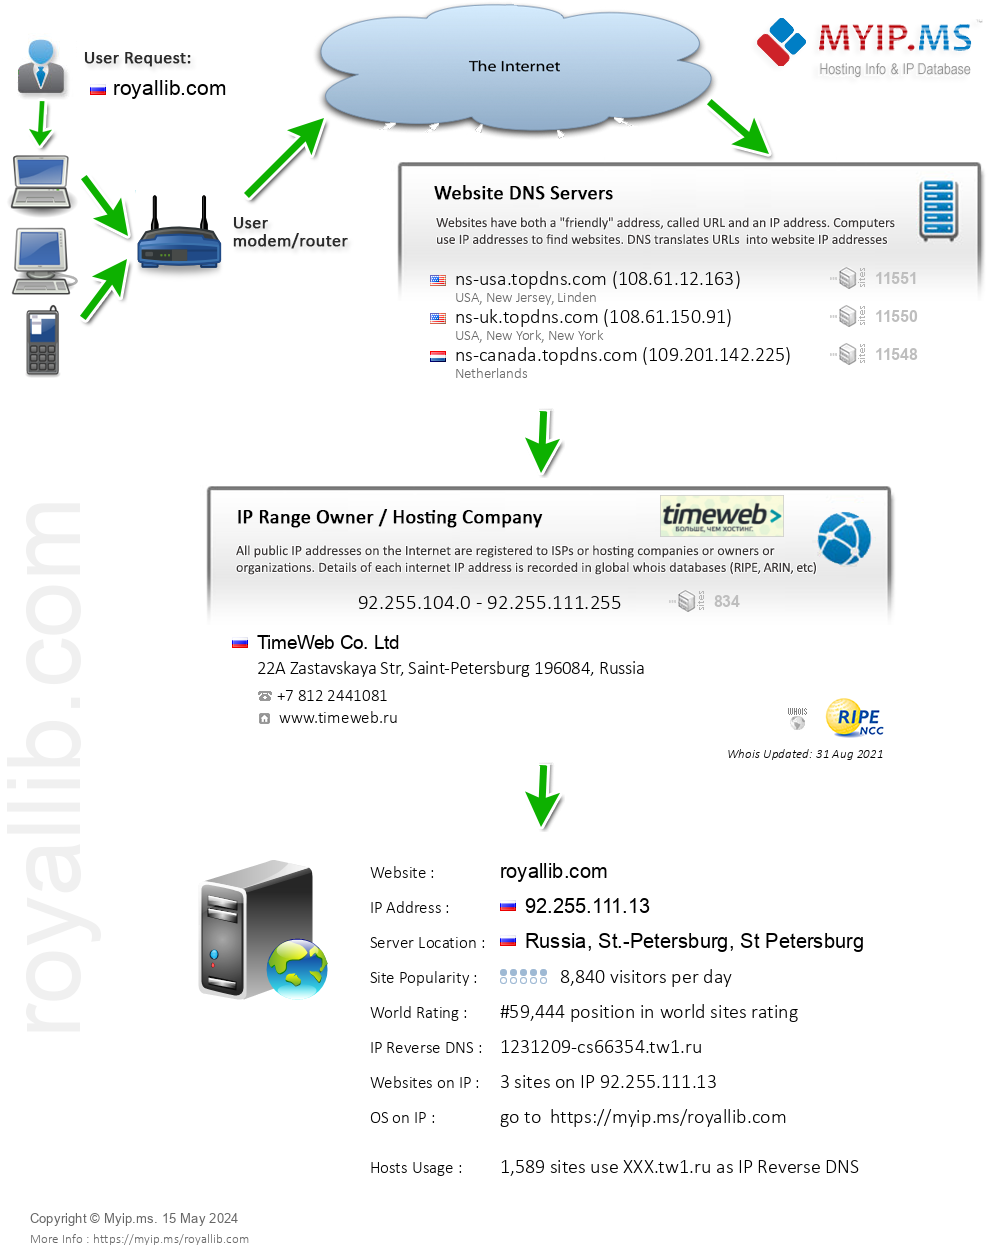 Royallib.com - Website Hosting Visual IP Diagram